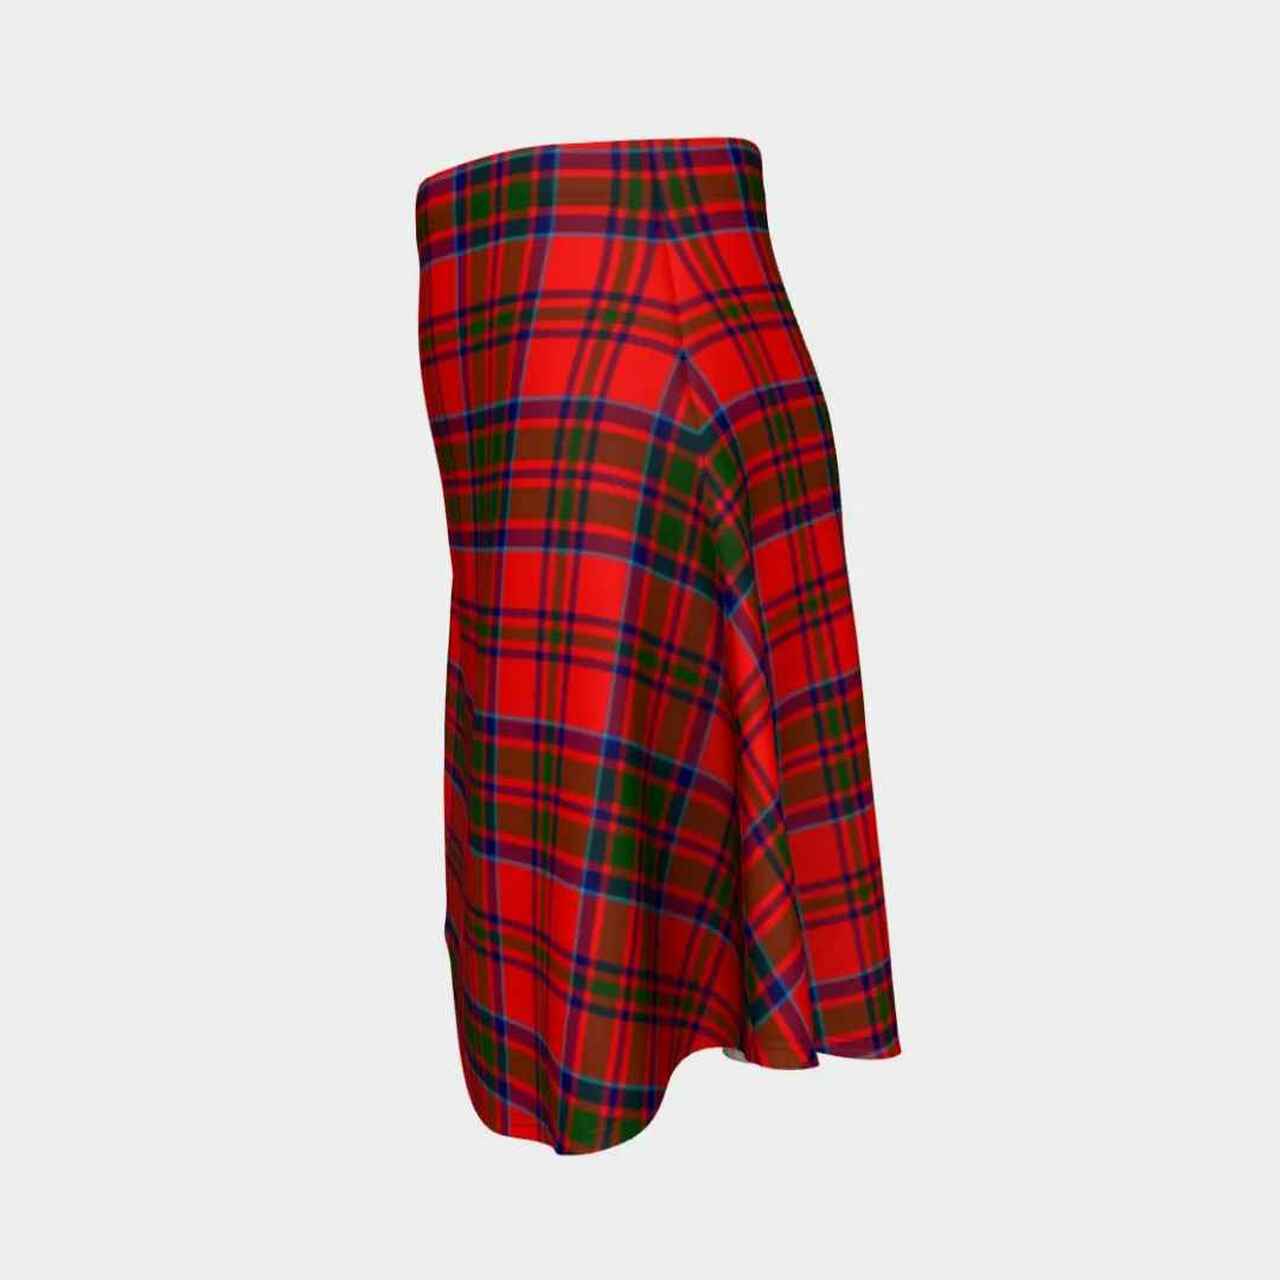 MacKillop Tartan Flared Skirt